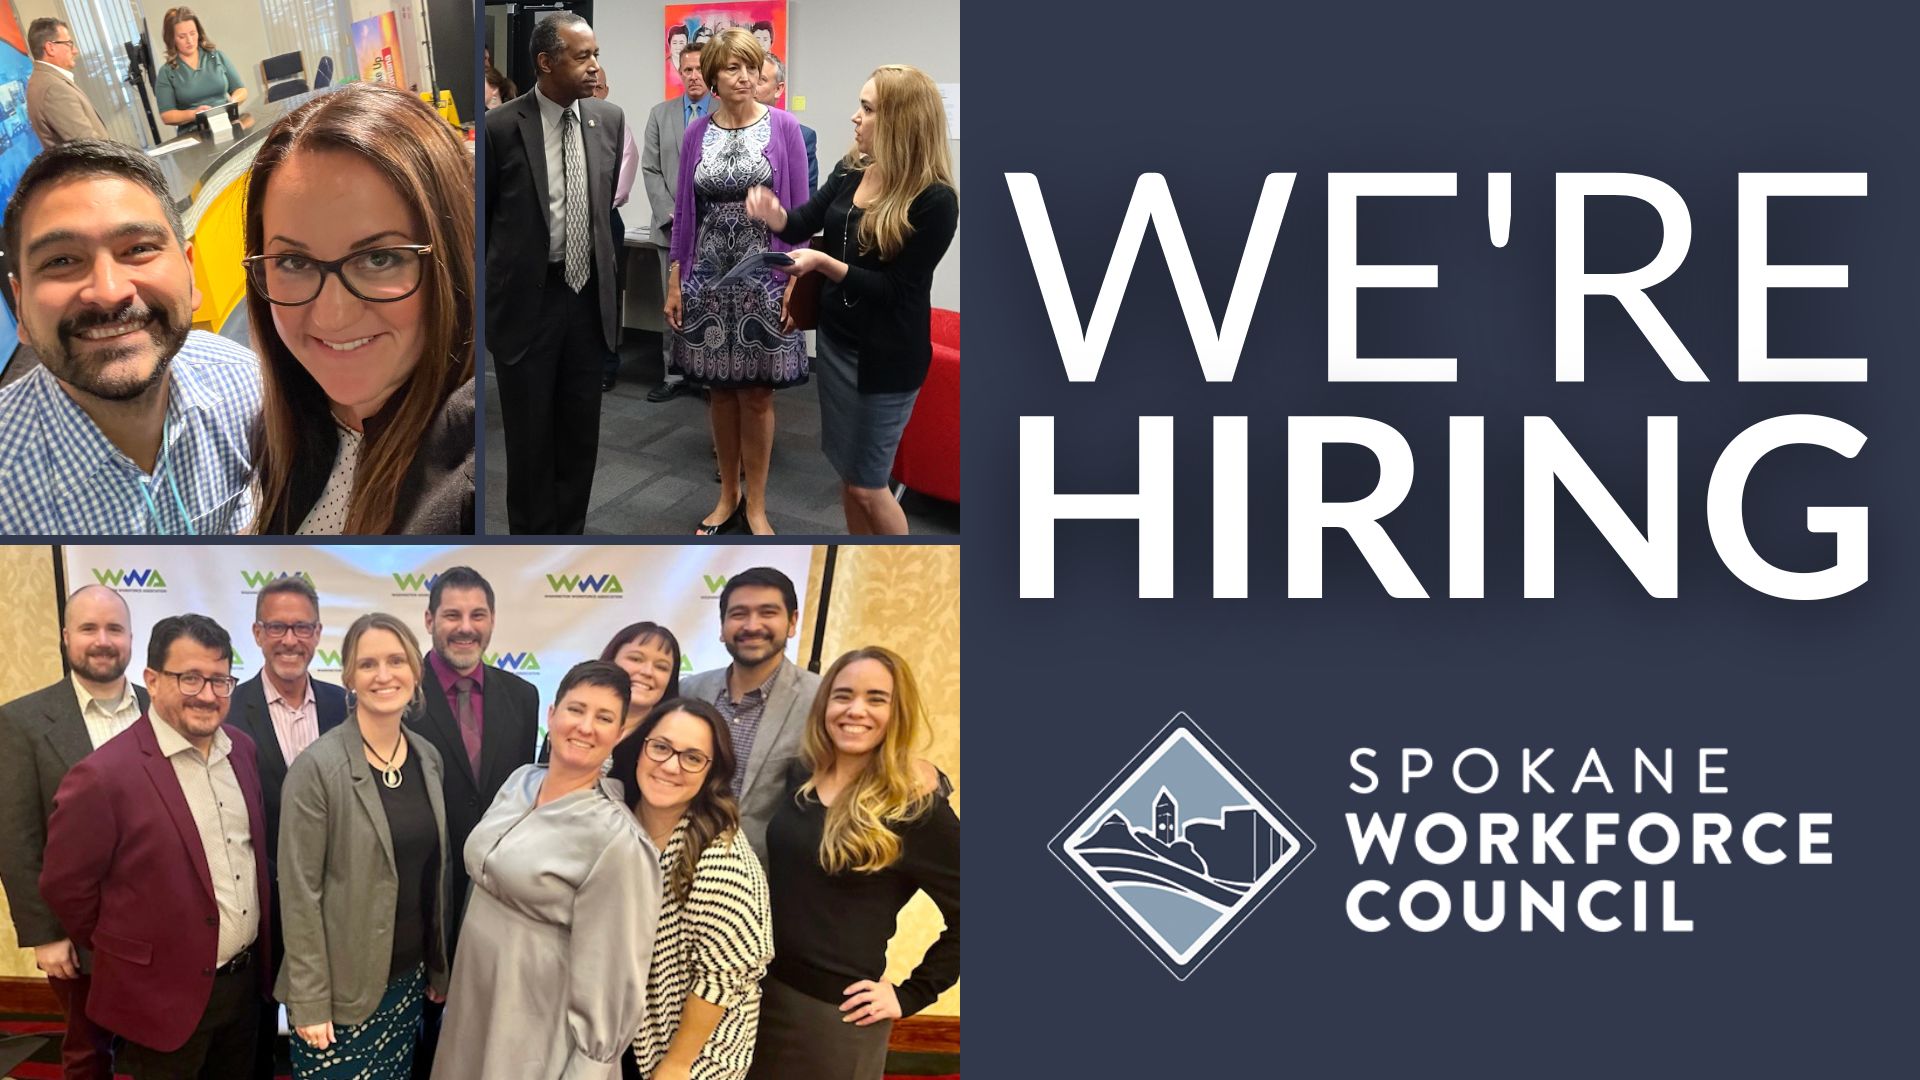 Spokane Workforce Council Jobs | View Employment Opportunities